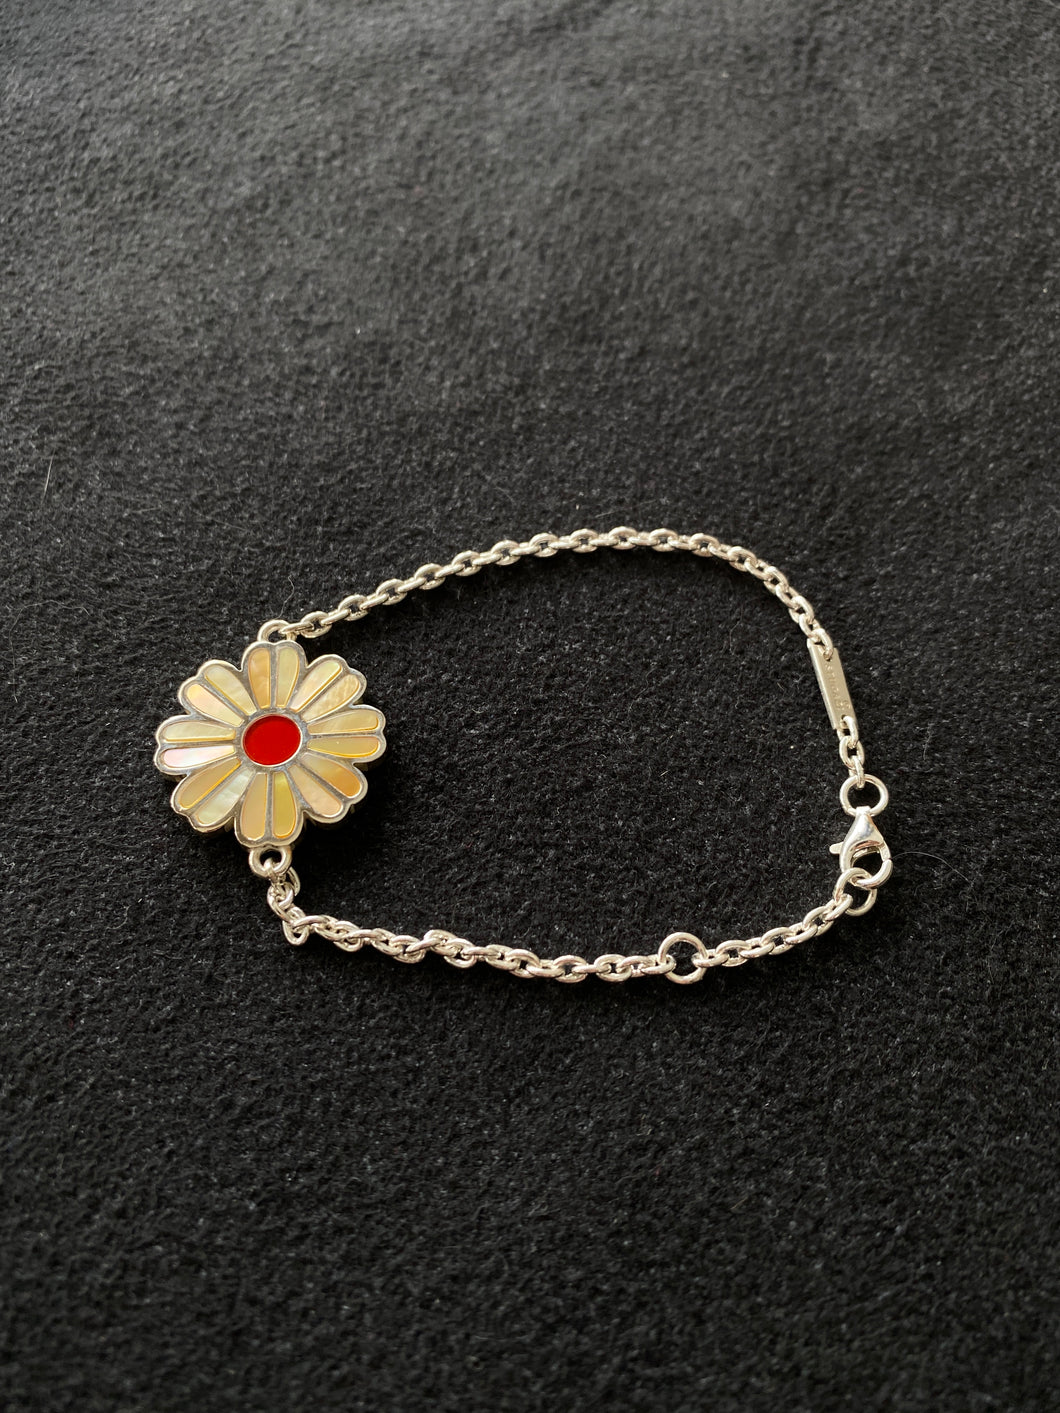 S925 Handmade chrysanthemum Bracelet